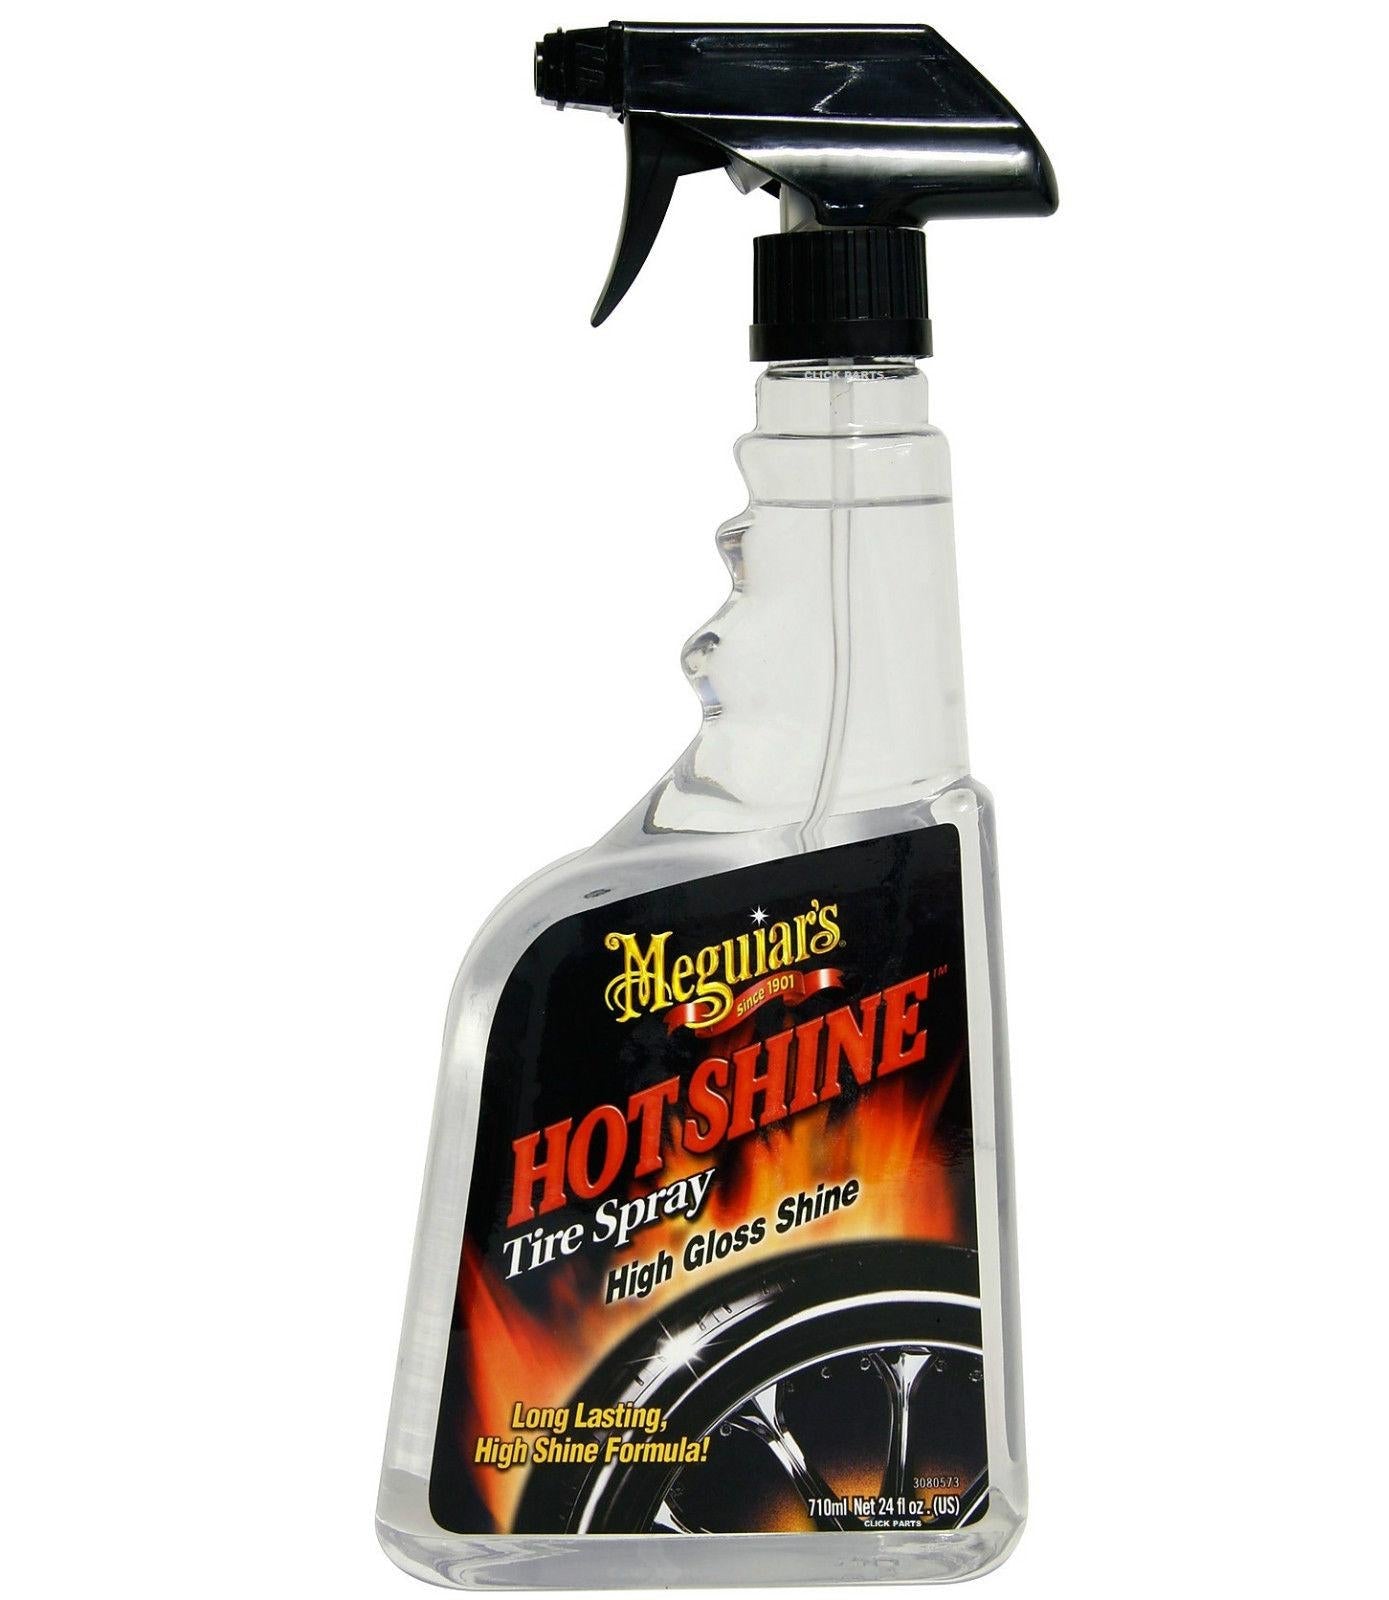 Meguiars Hot Shine Tire Spray 710ml